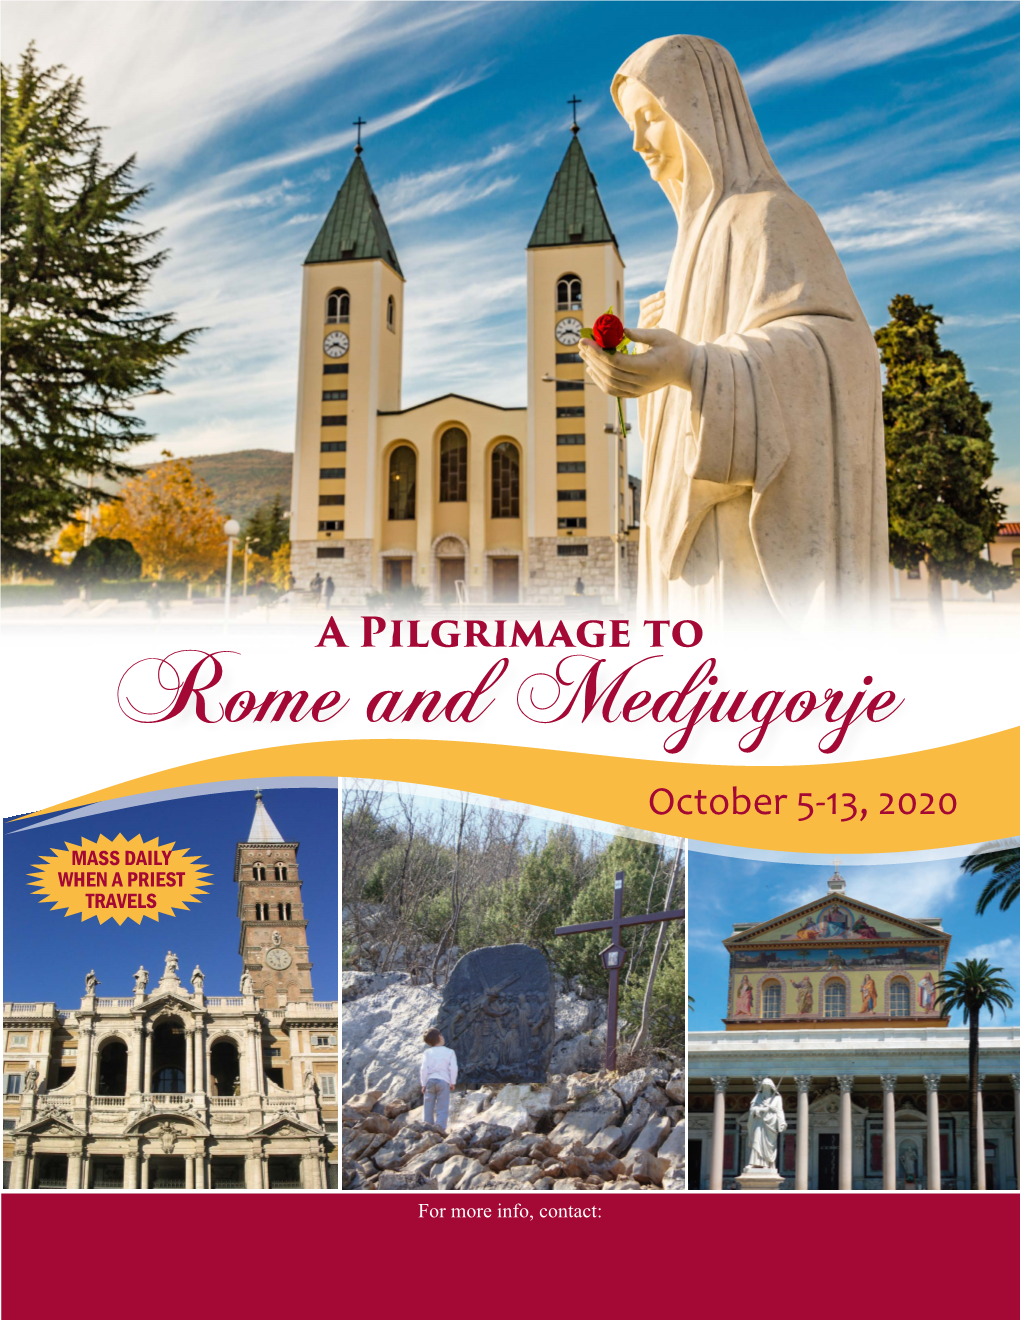 Rome and Medjugorje October 5-13, 2020